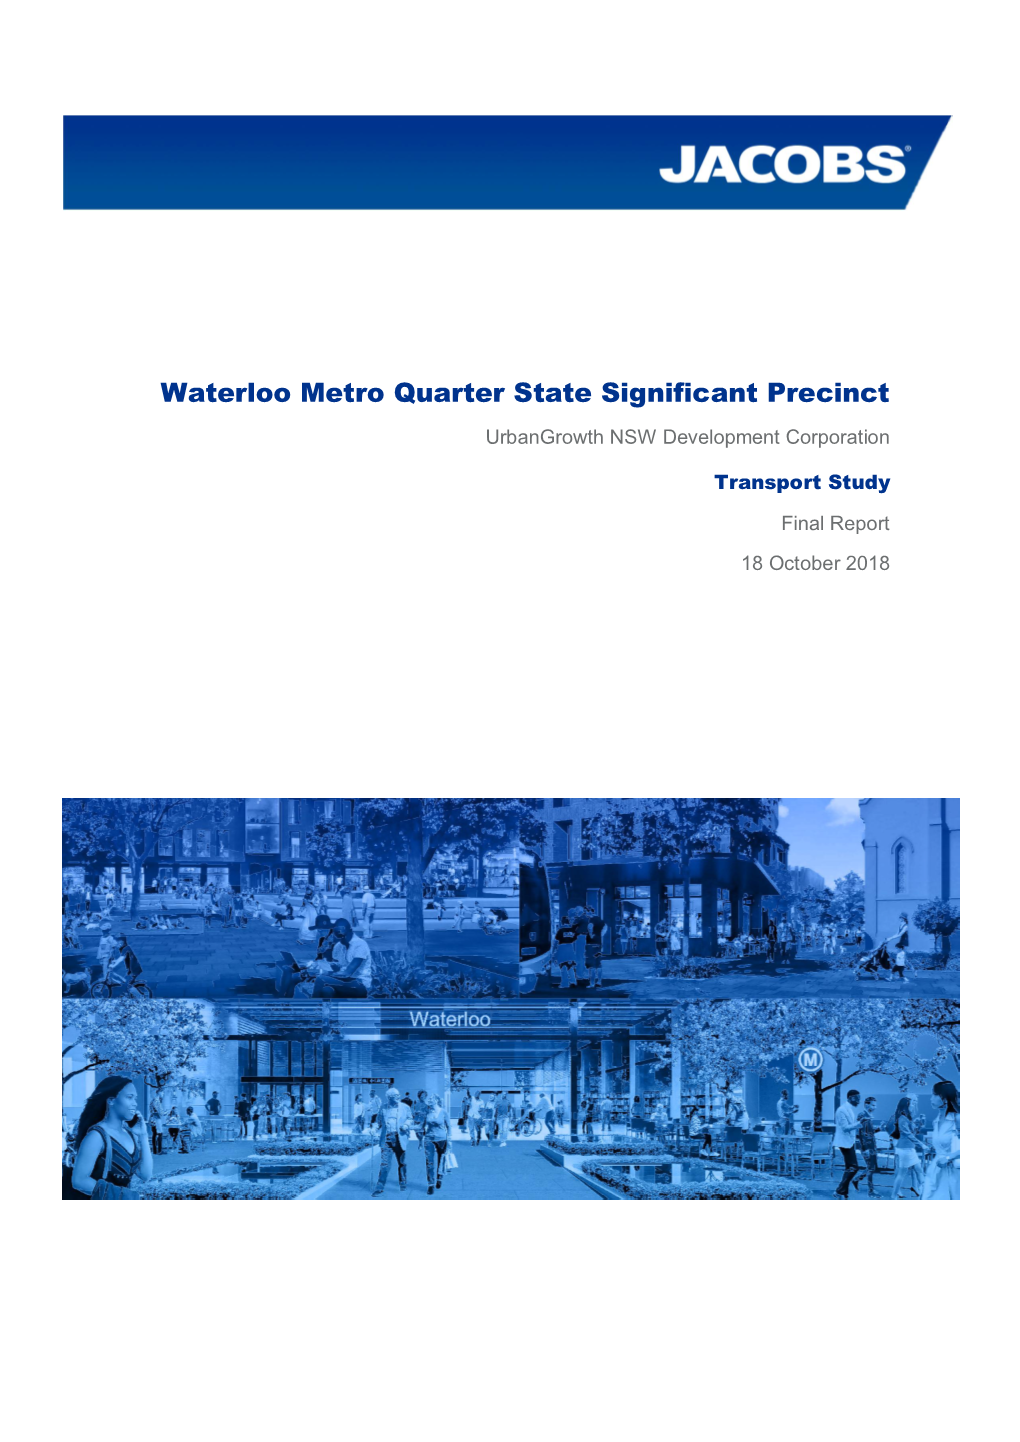 Waterloo Metro Quarter State Significant Precinct Urbangrowth NSW Development Corporation